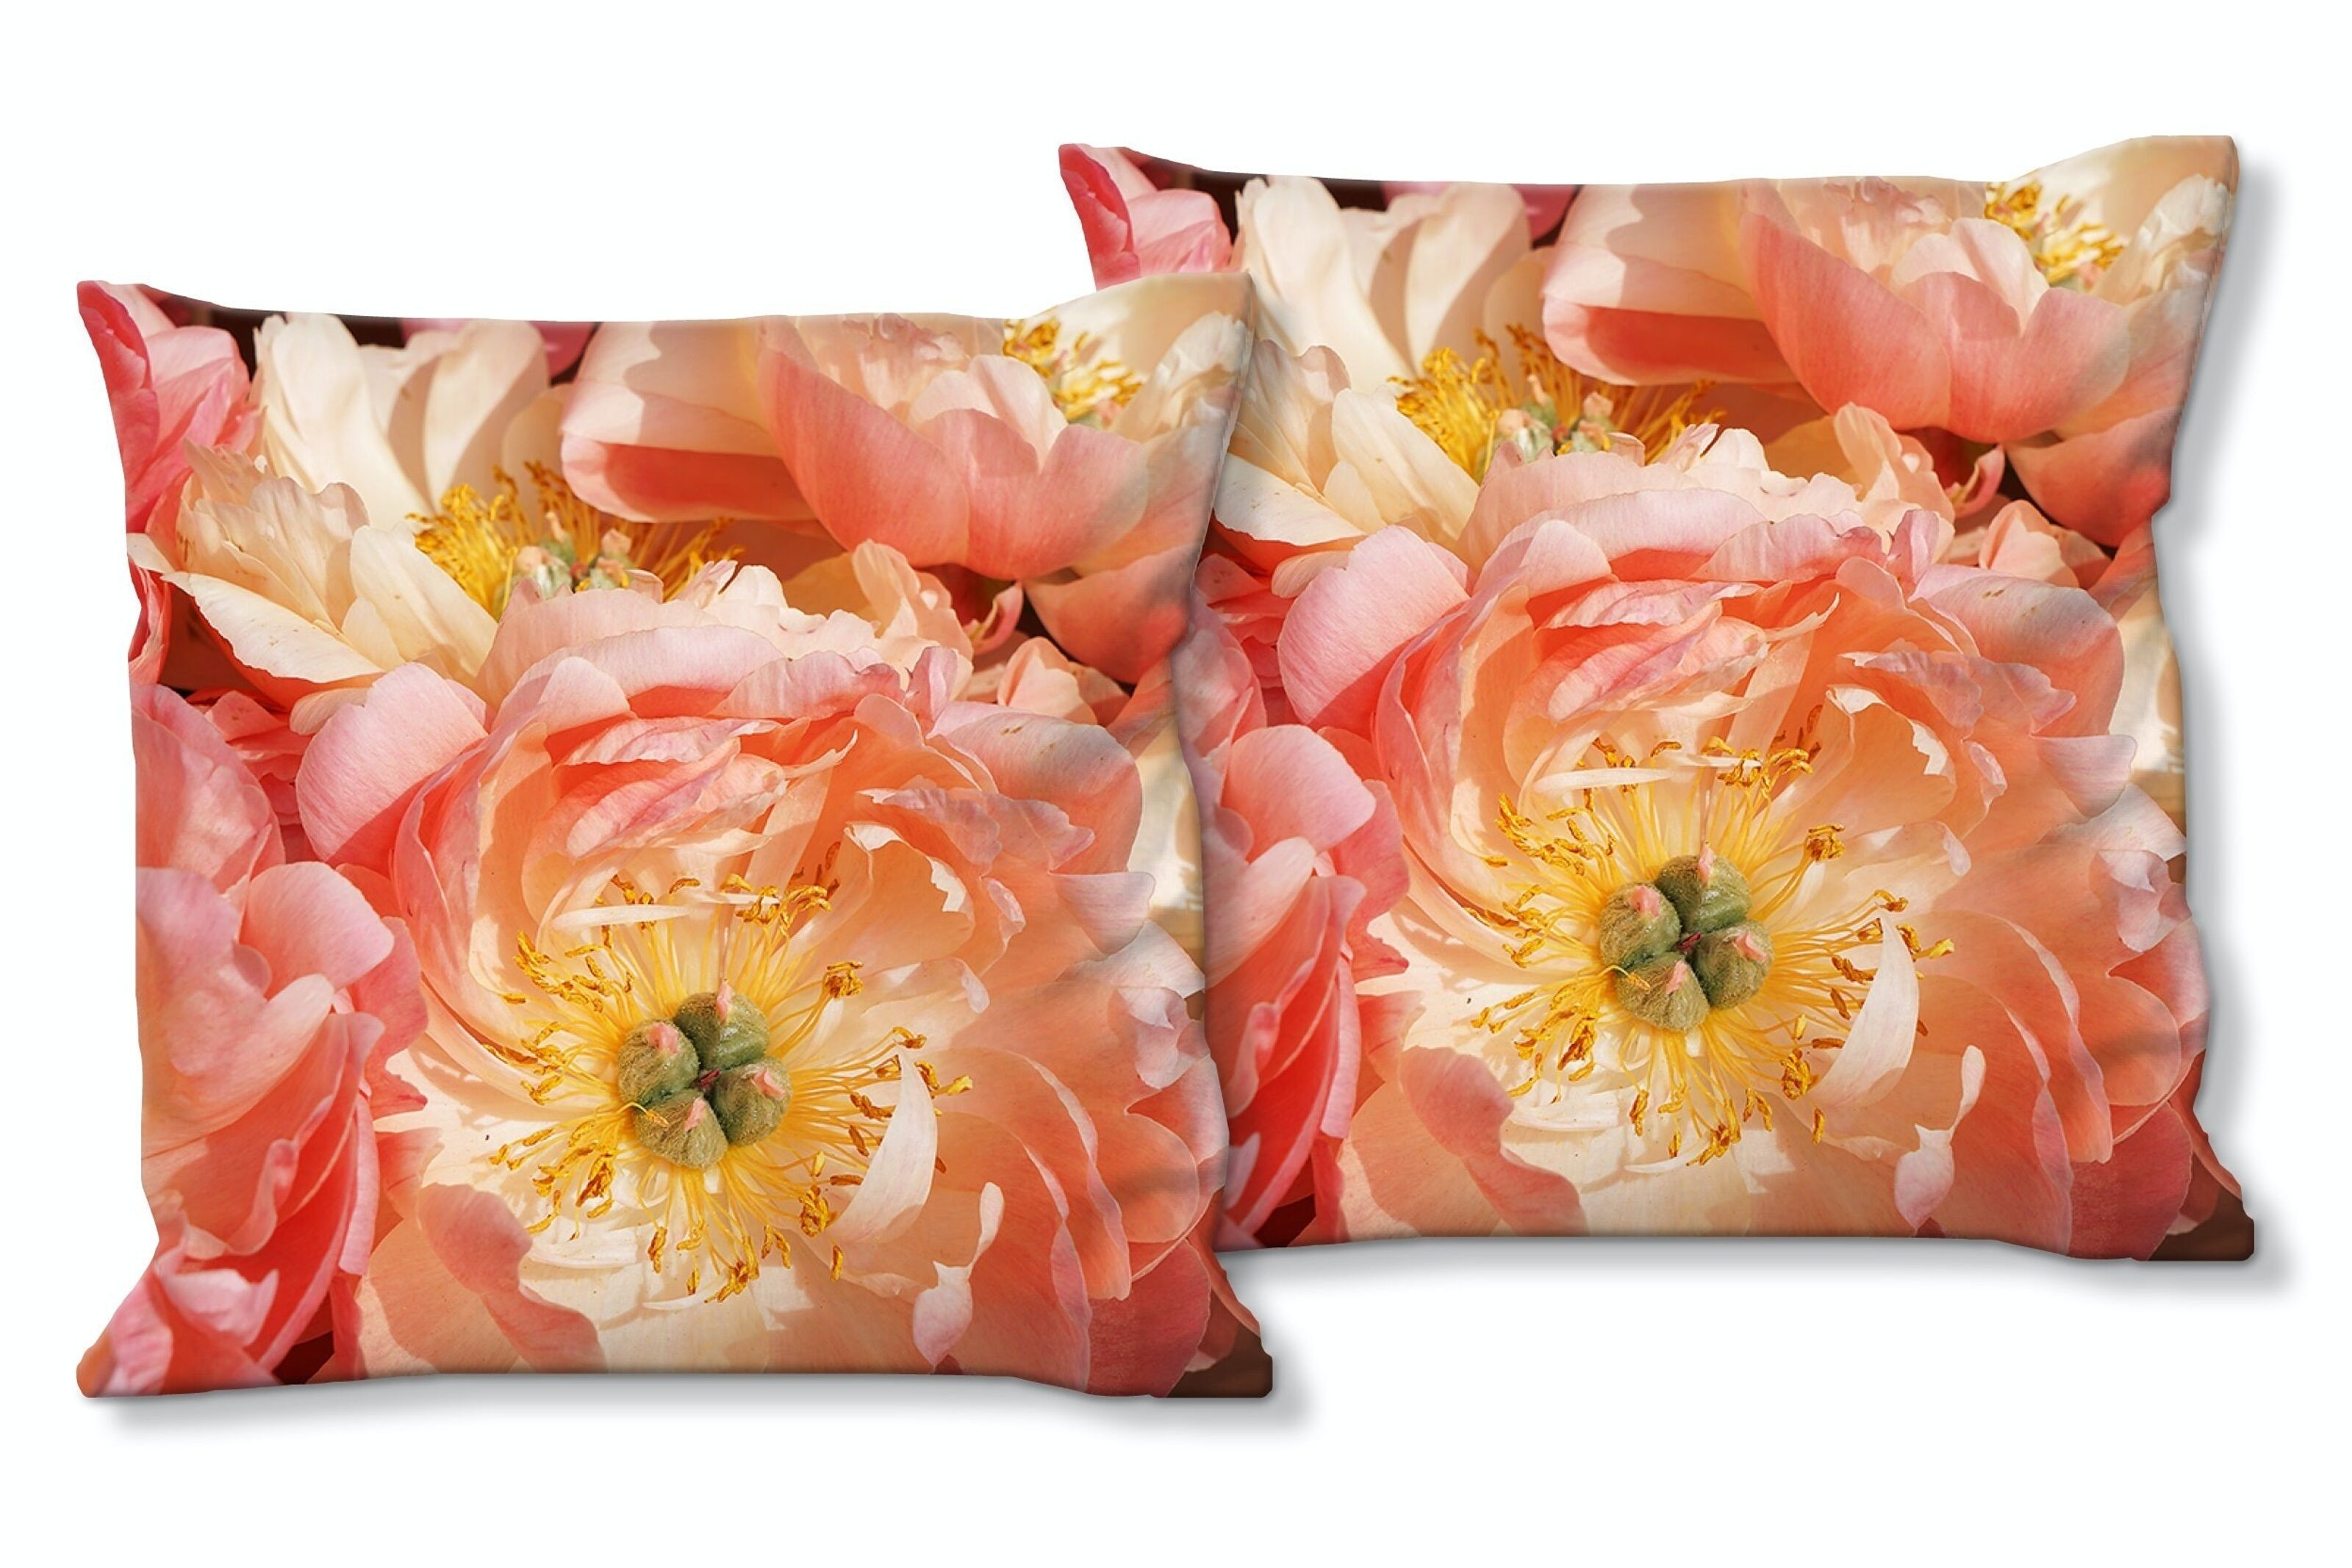 Buy wholesale cushion decorative Decorative cover, cm motif: - cushion decorative cover x cushion 40 cushion, premium size: set (2 cushion, photo - 40 blossom pieces), pink photo cushion, peony